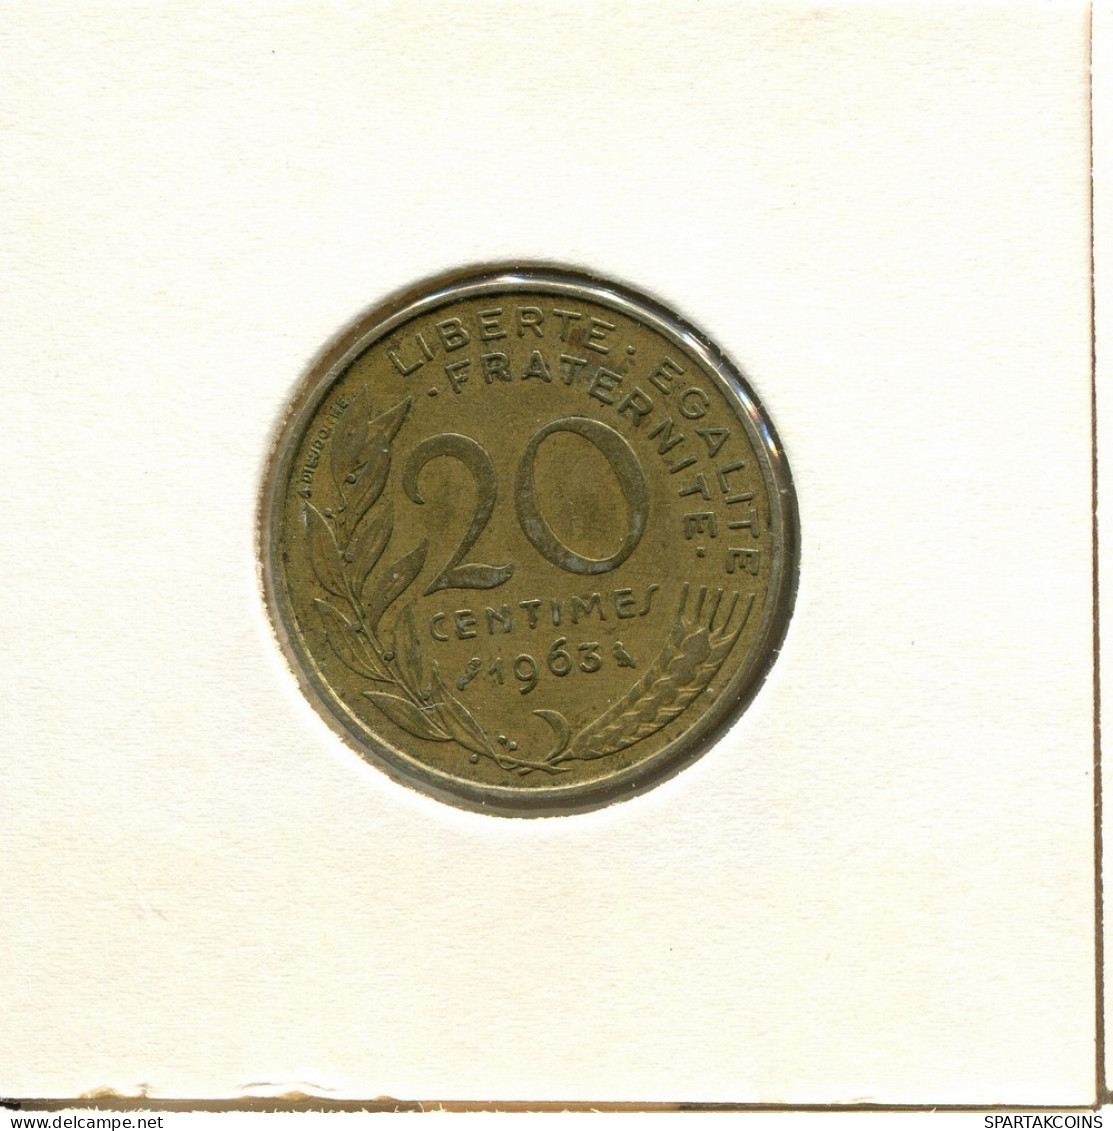 20 CENTIMES 1963 FRANCIA FRANCE Moneda #BB479.E.A - 20 Centimes